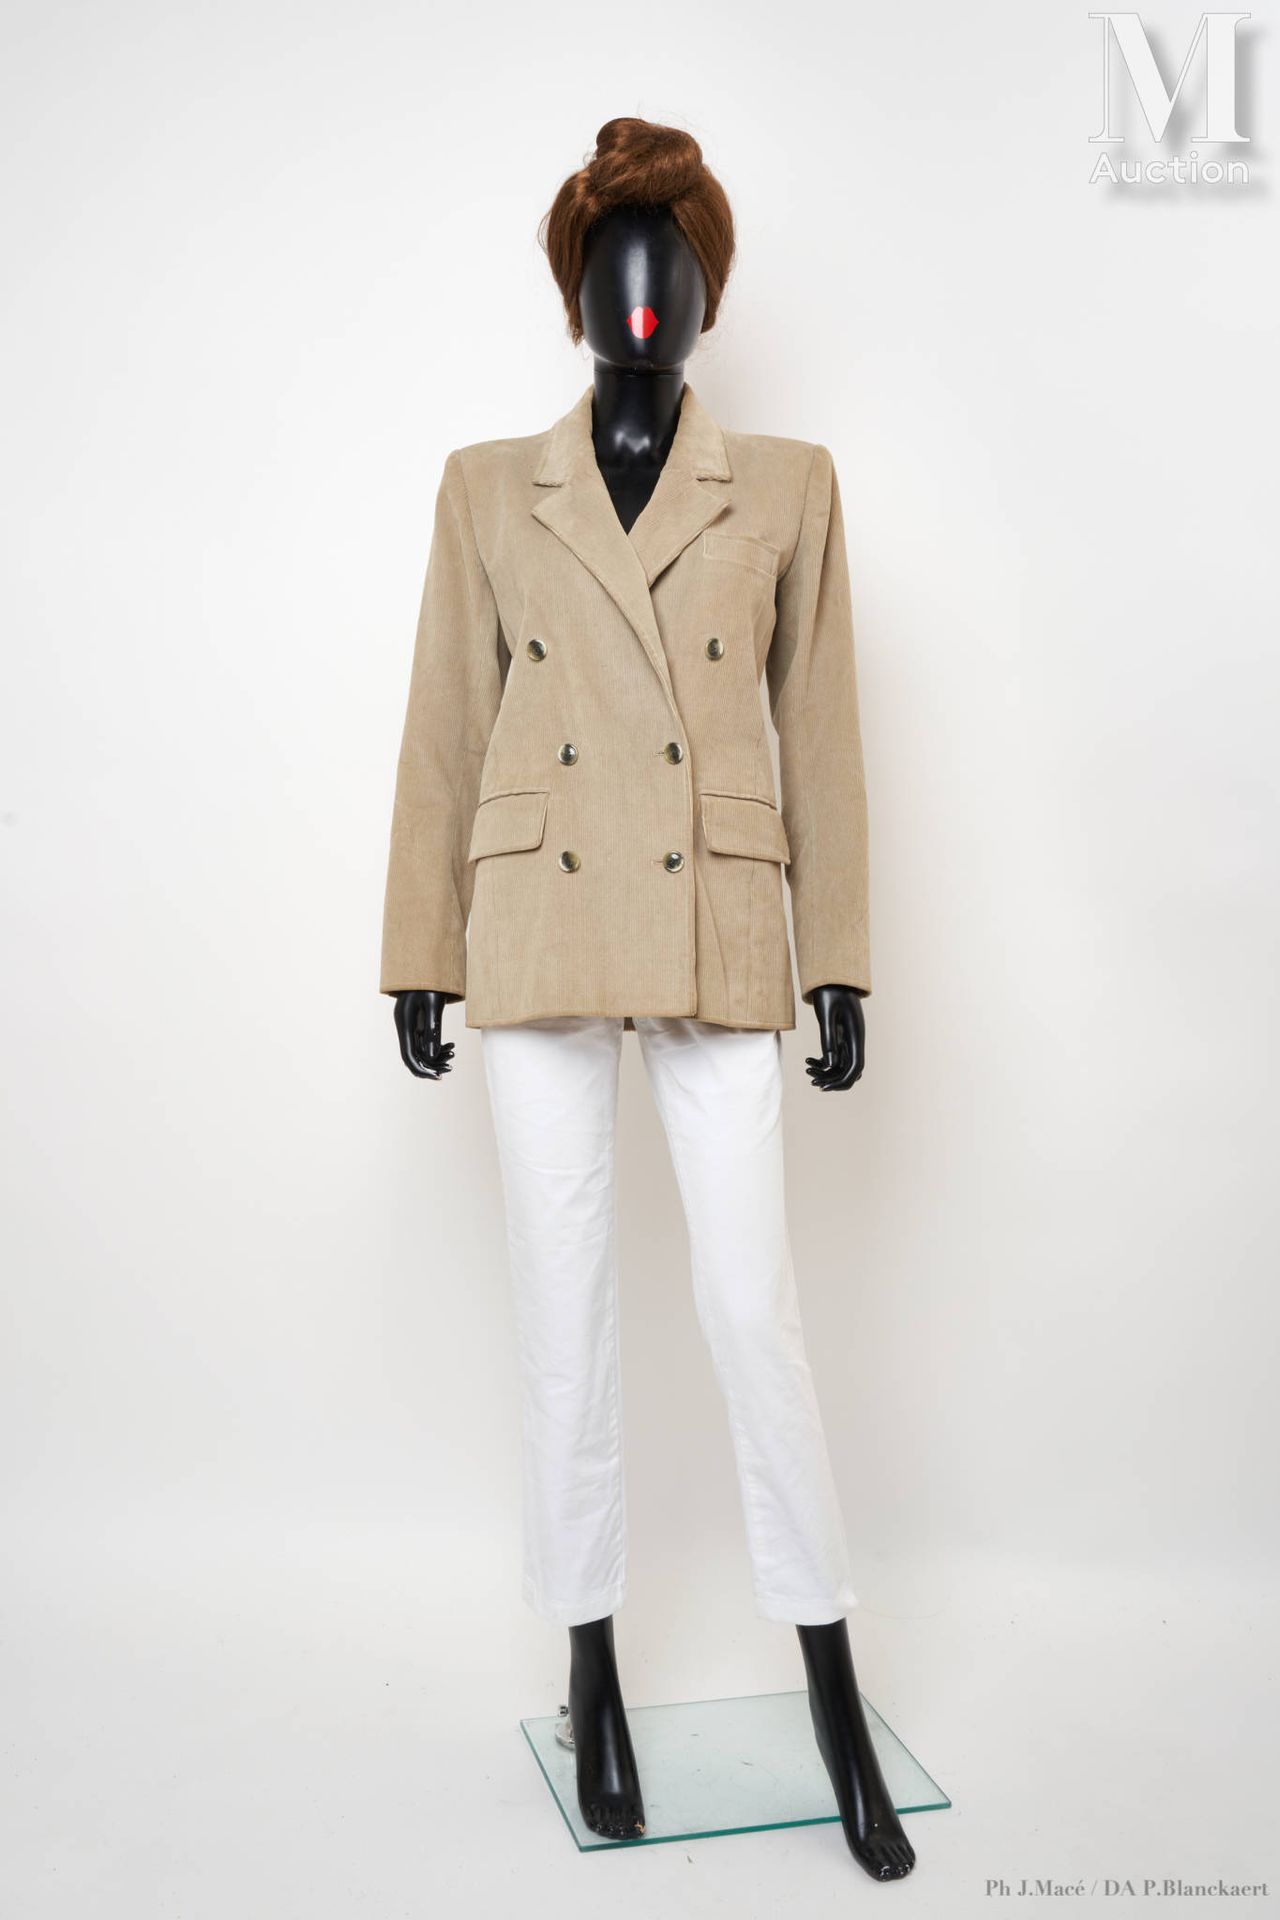 SAINT LAURENT RIVE GAUCHE - 1980's 双排扣外套
咖啡色灯芯绒材质 
大约S码
背部和领口有污垢